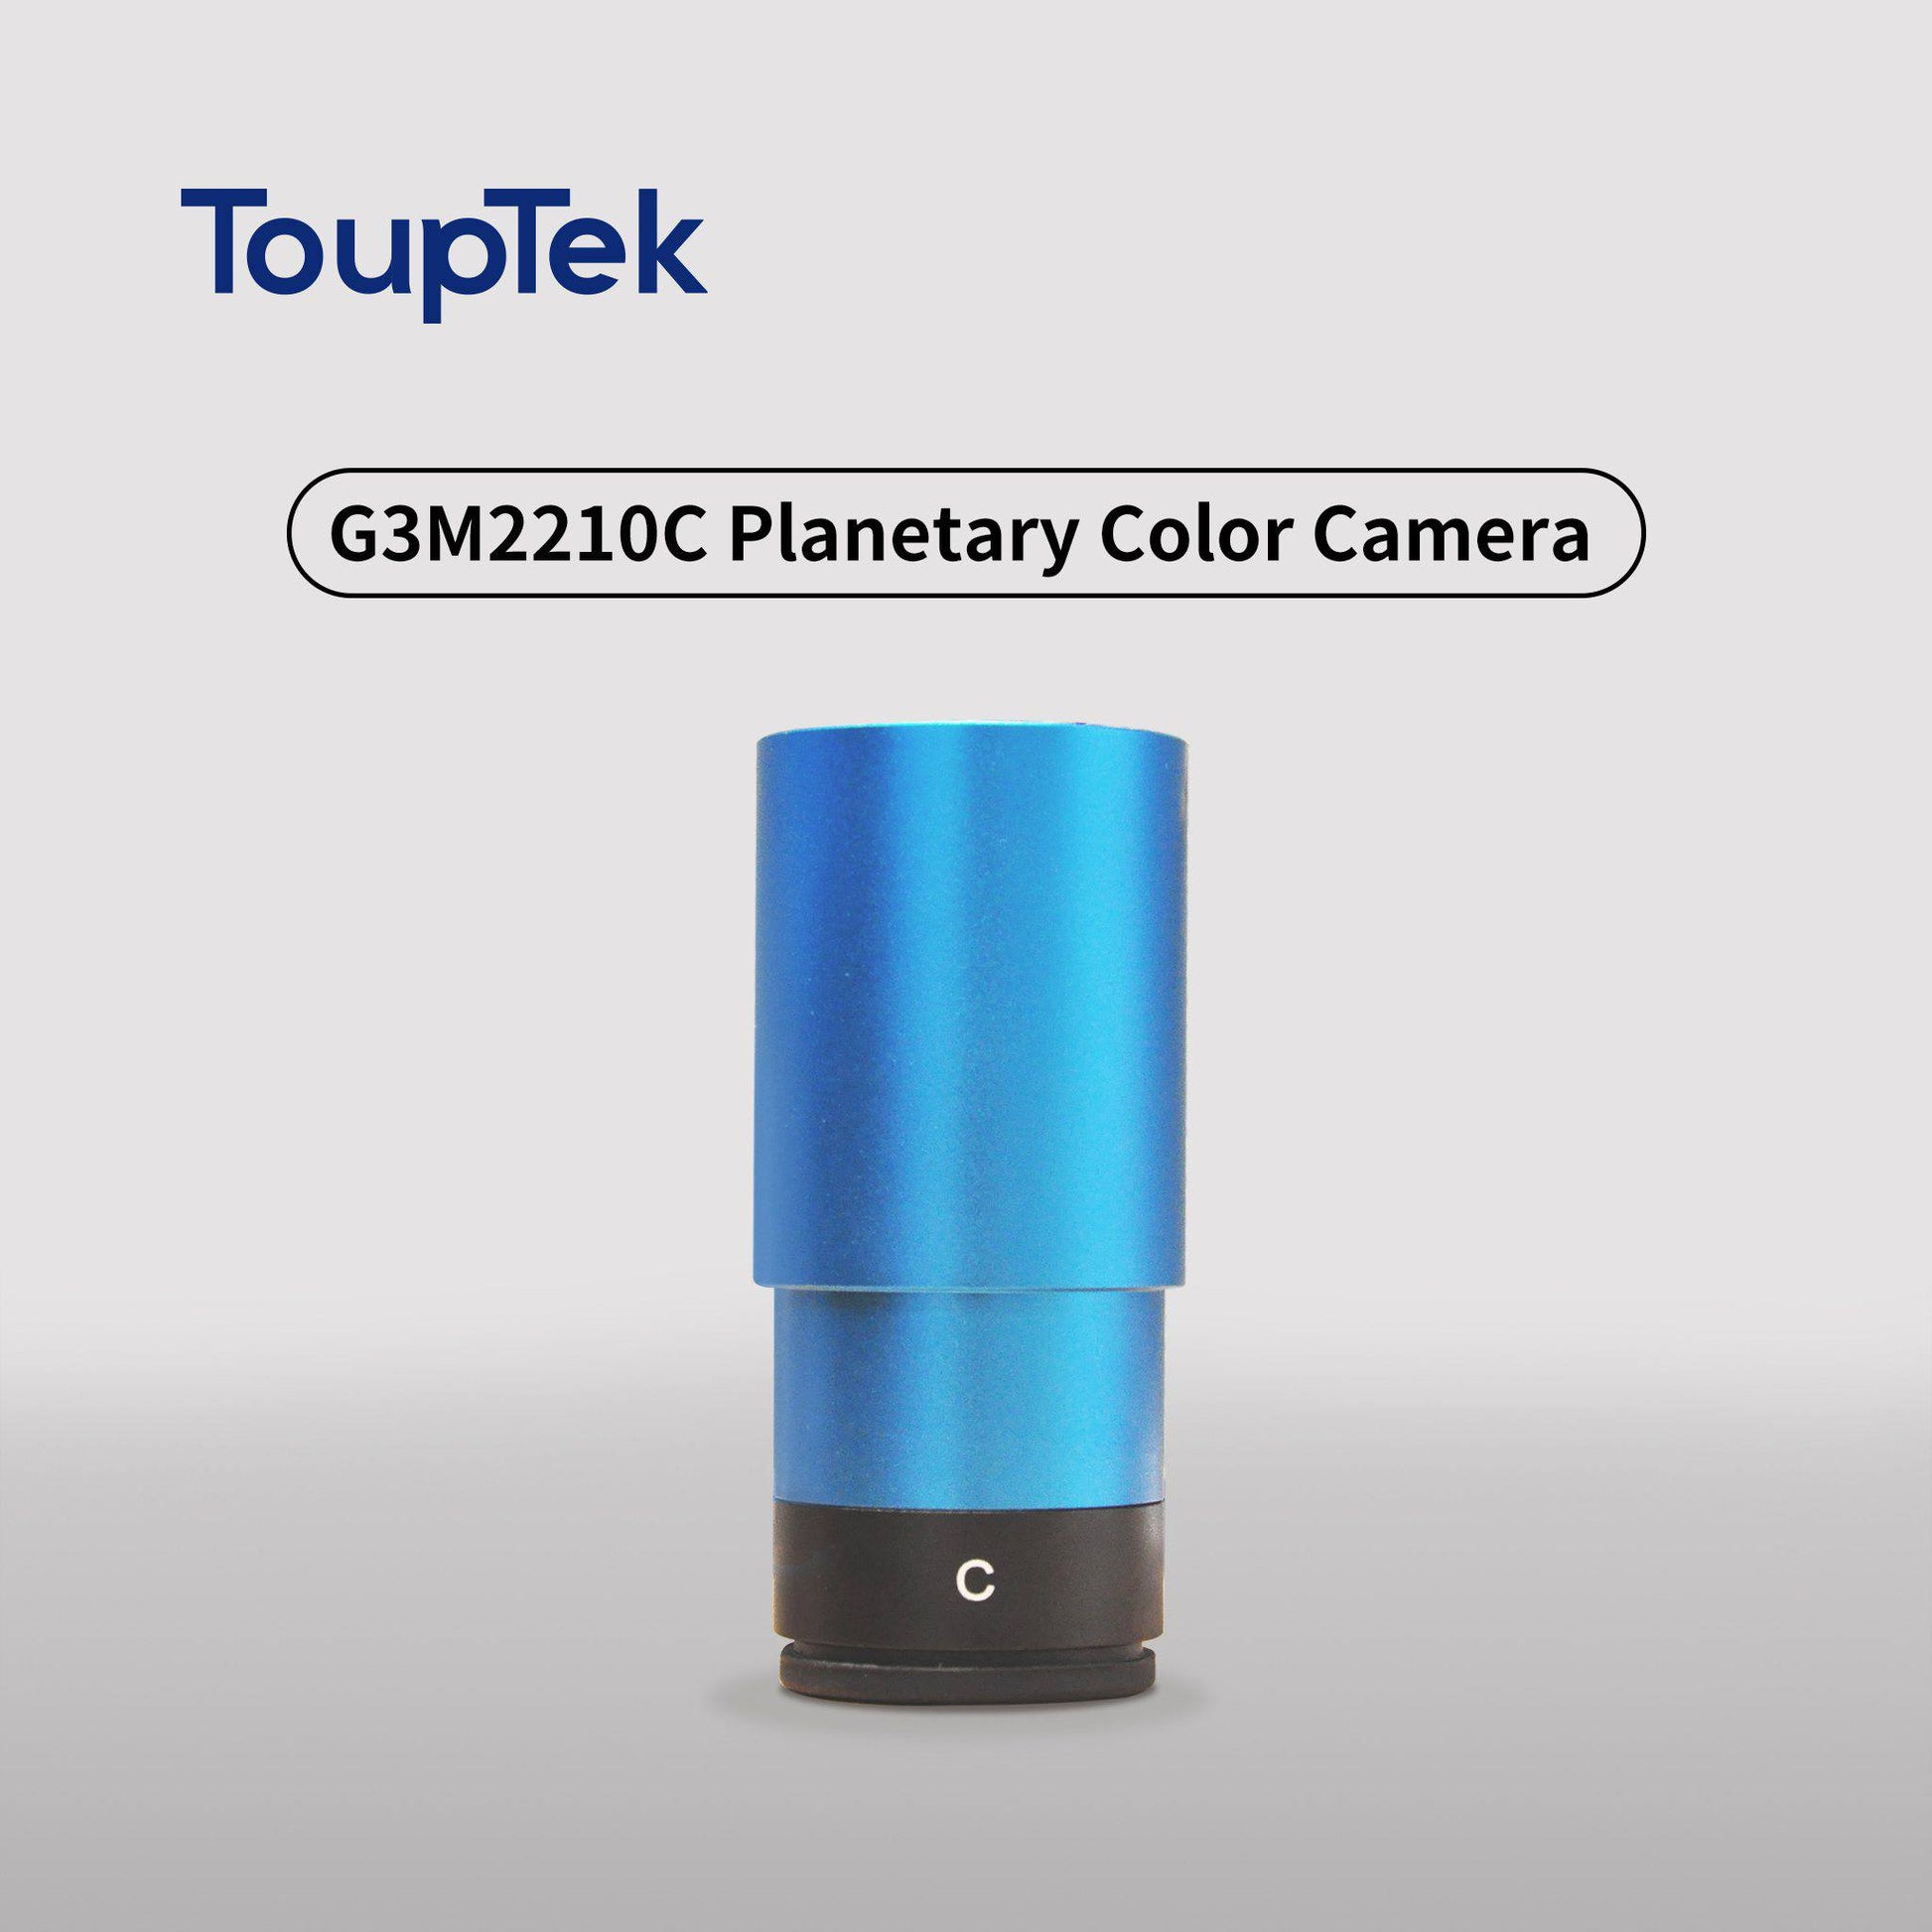 G3M2210C Planetary Color Camera